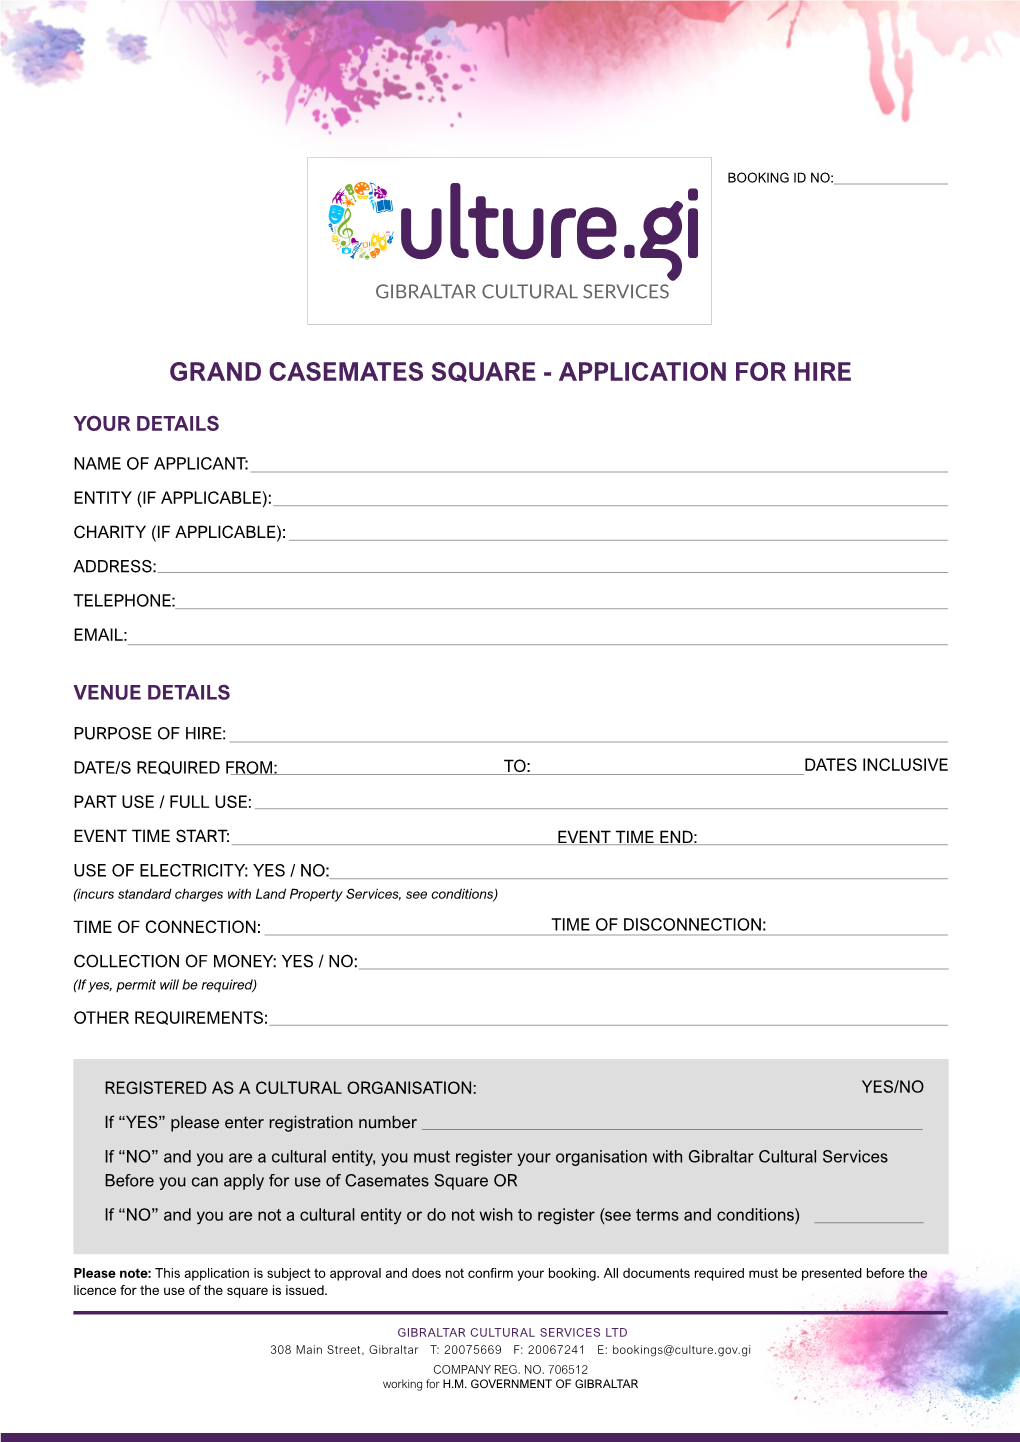 Grand Casemates Square - Application for Hire